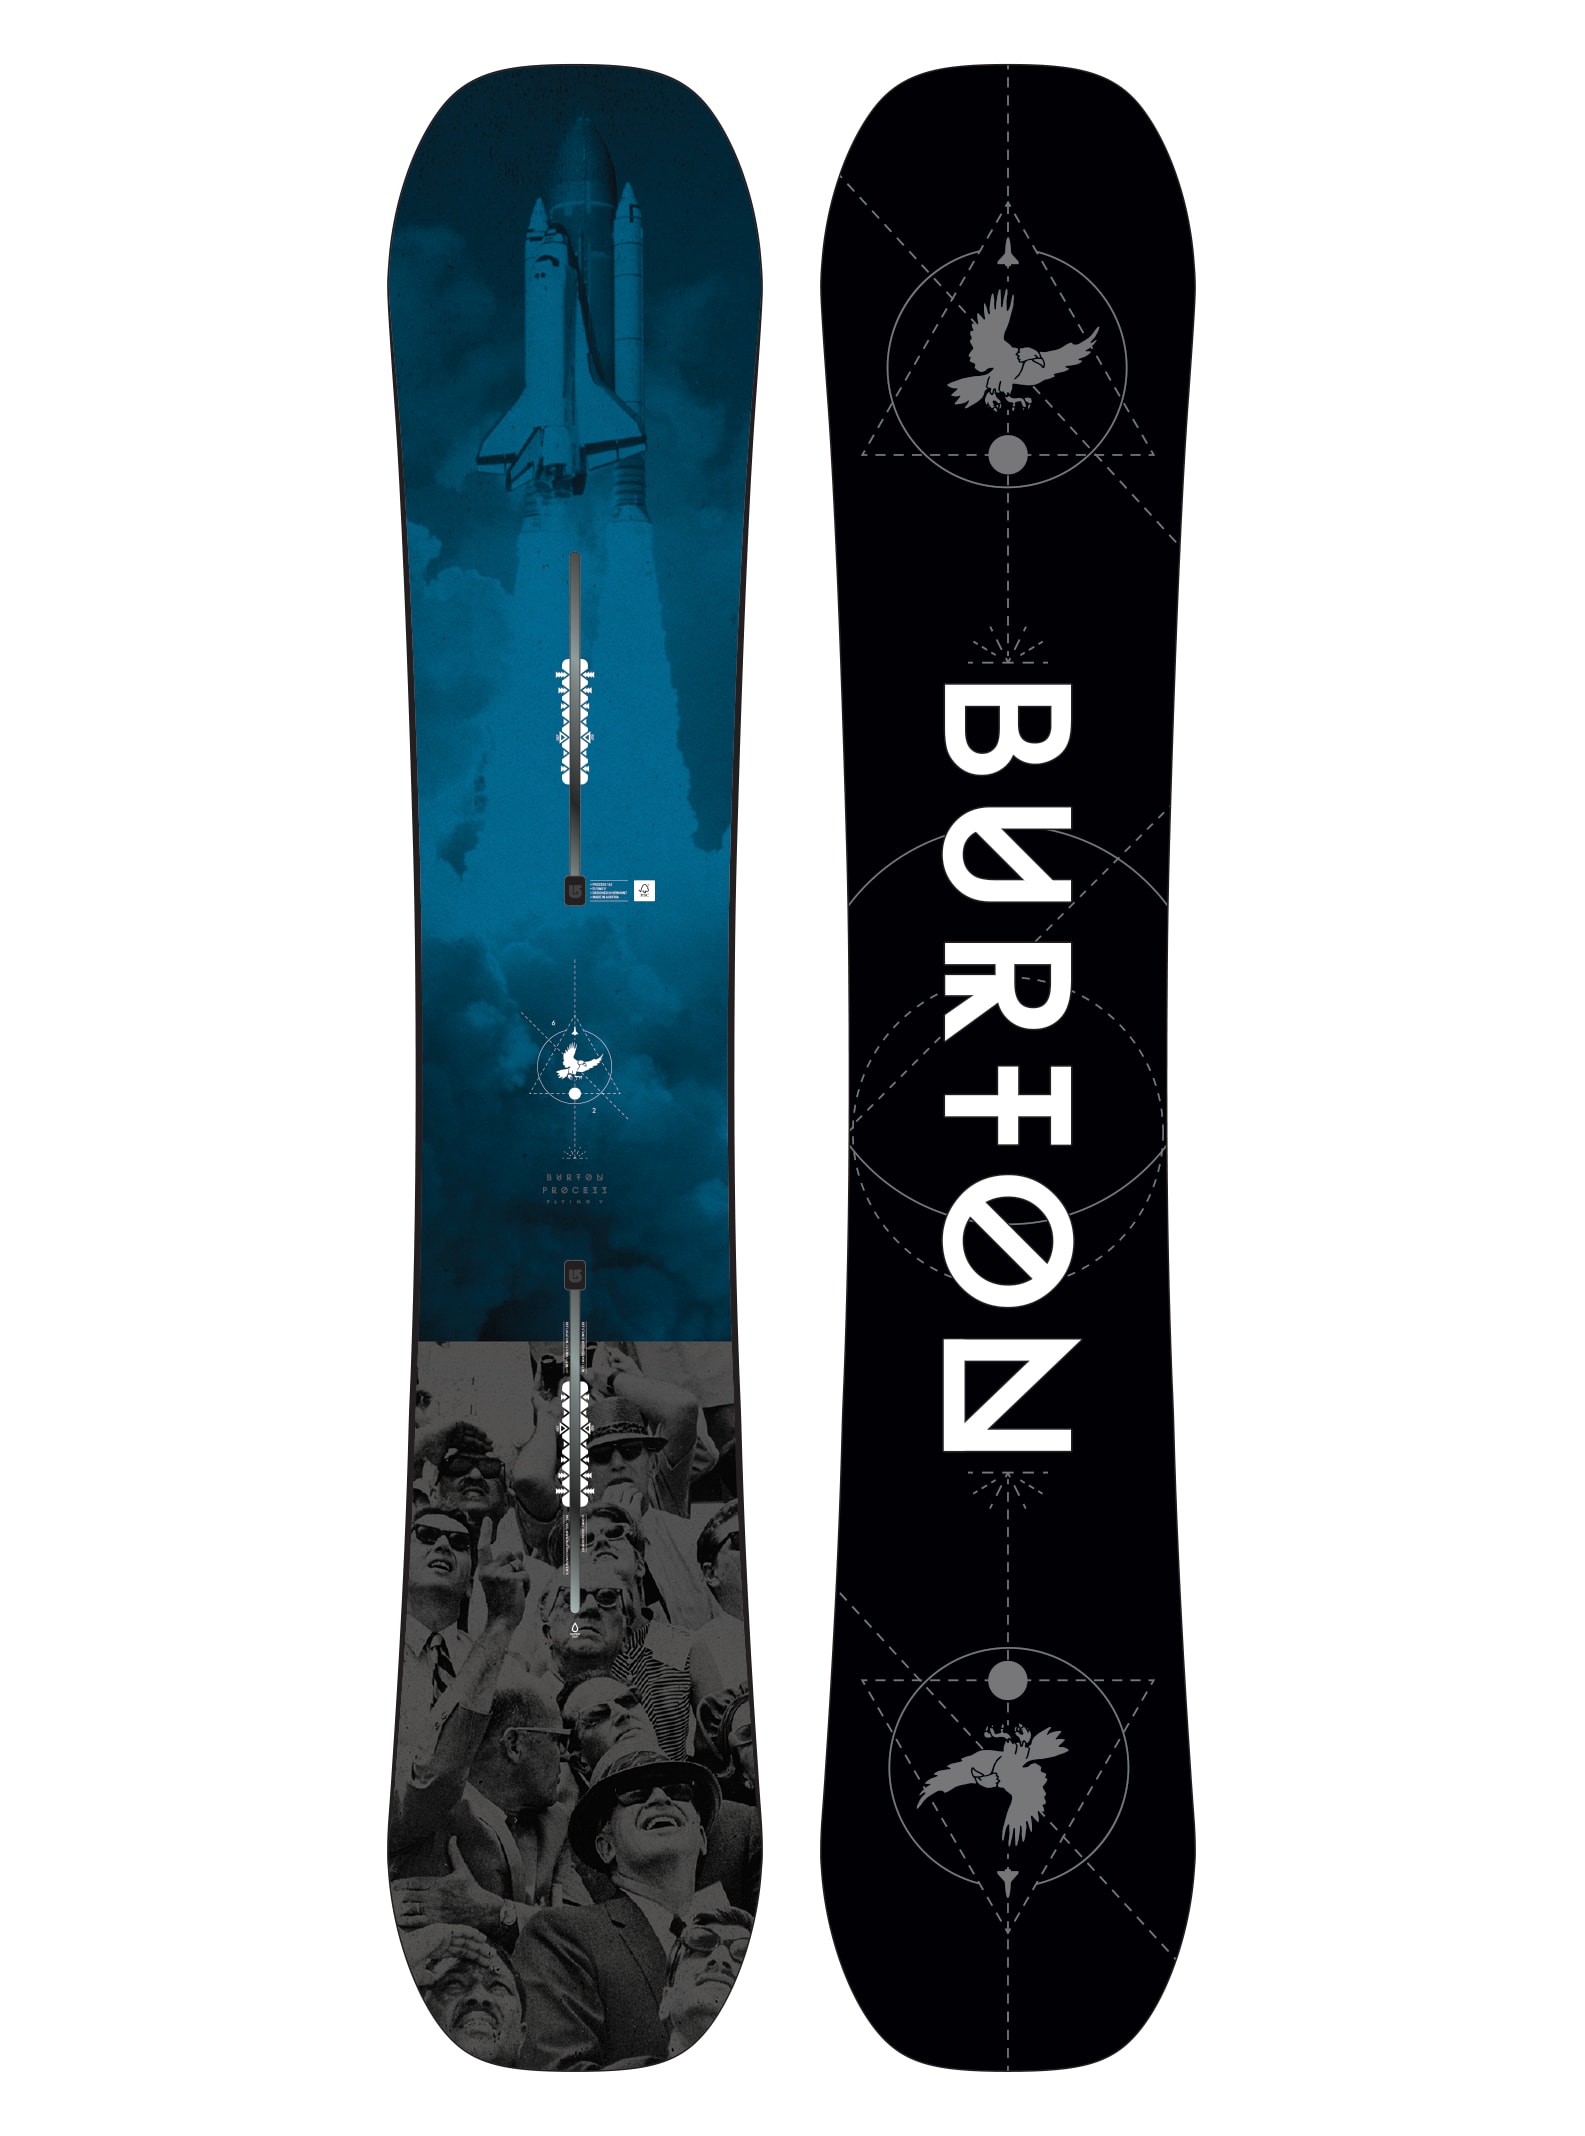 Groenten Regelen knop Men's Burton Process Flying V Snowboard | Burton Snowboards Winter 2018 US